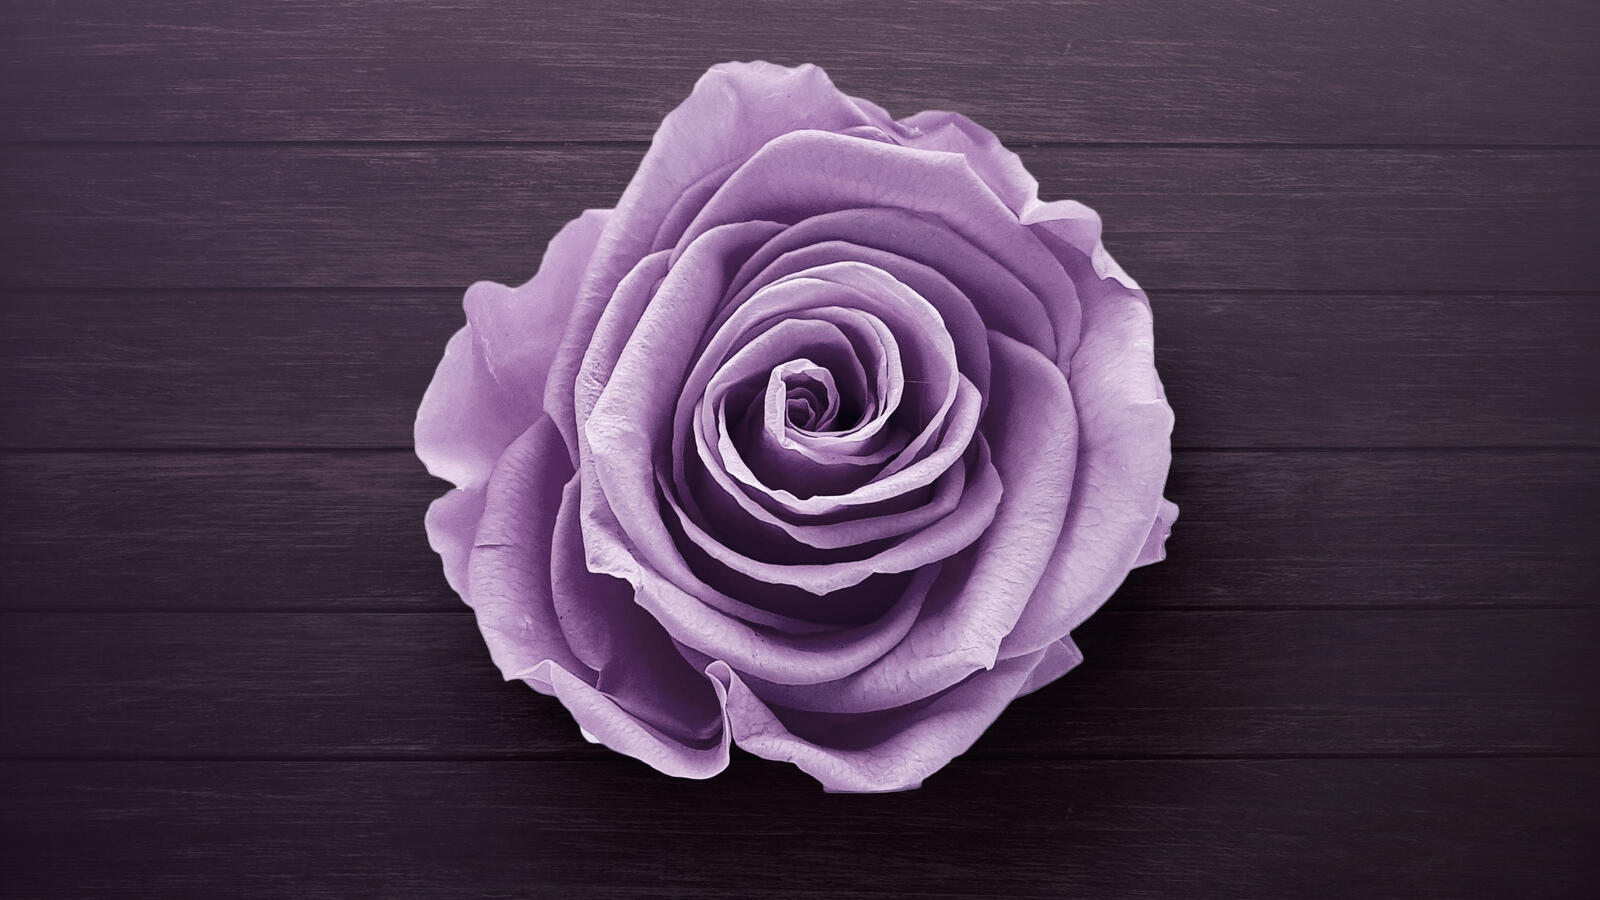 Wallpapers rose purple bud rosebud on the desktop